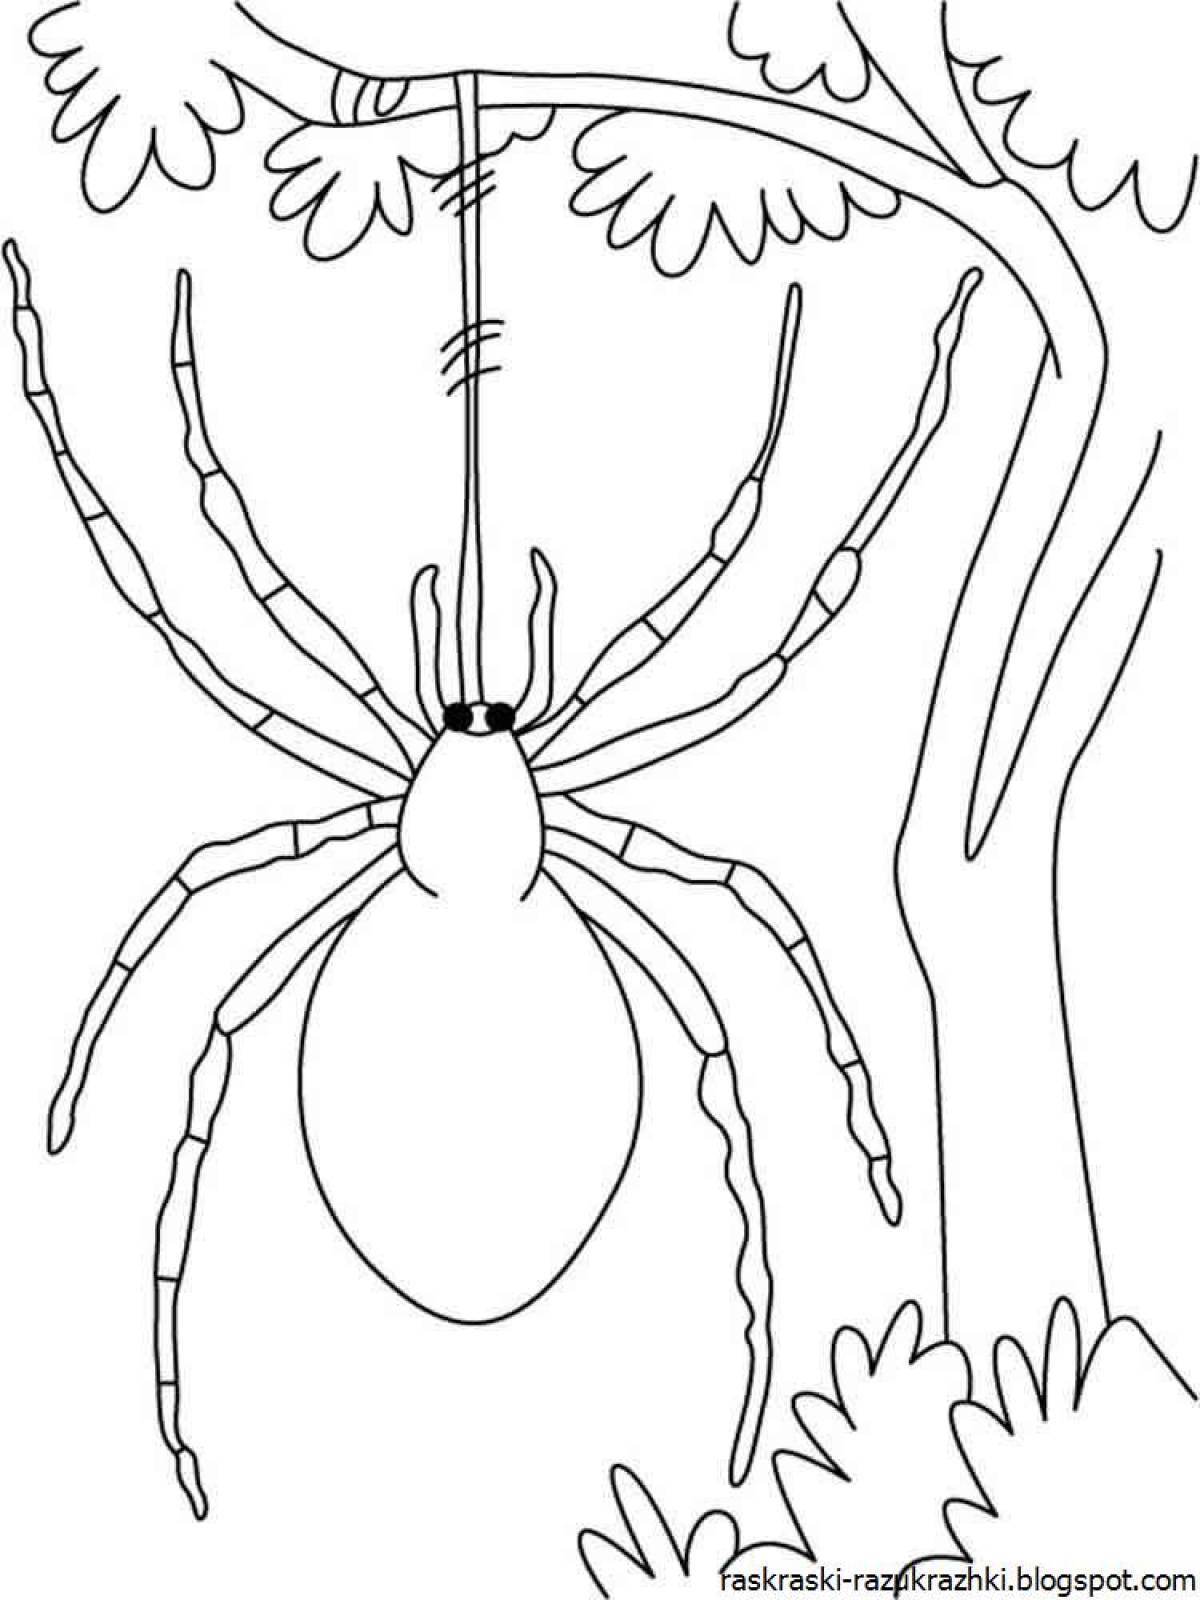 Spider for kids #4